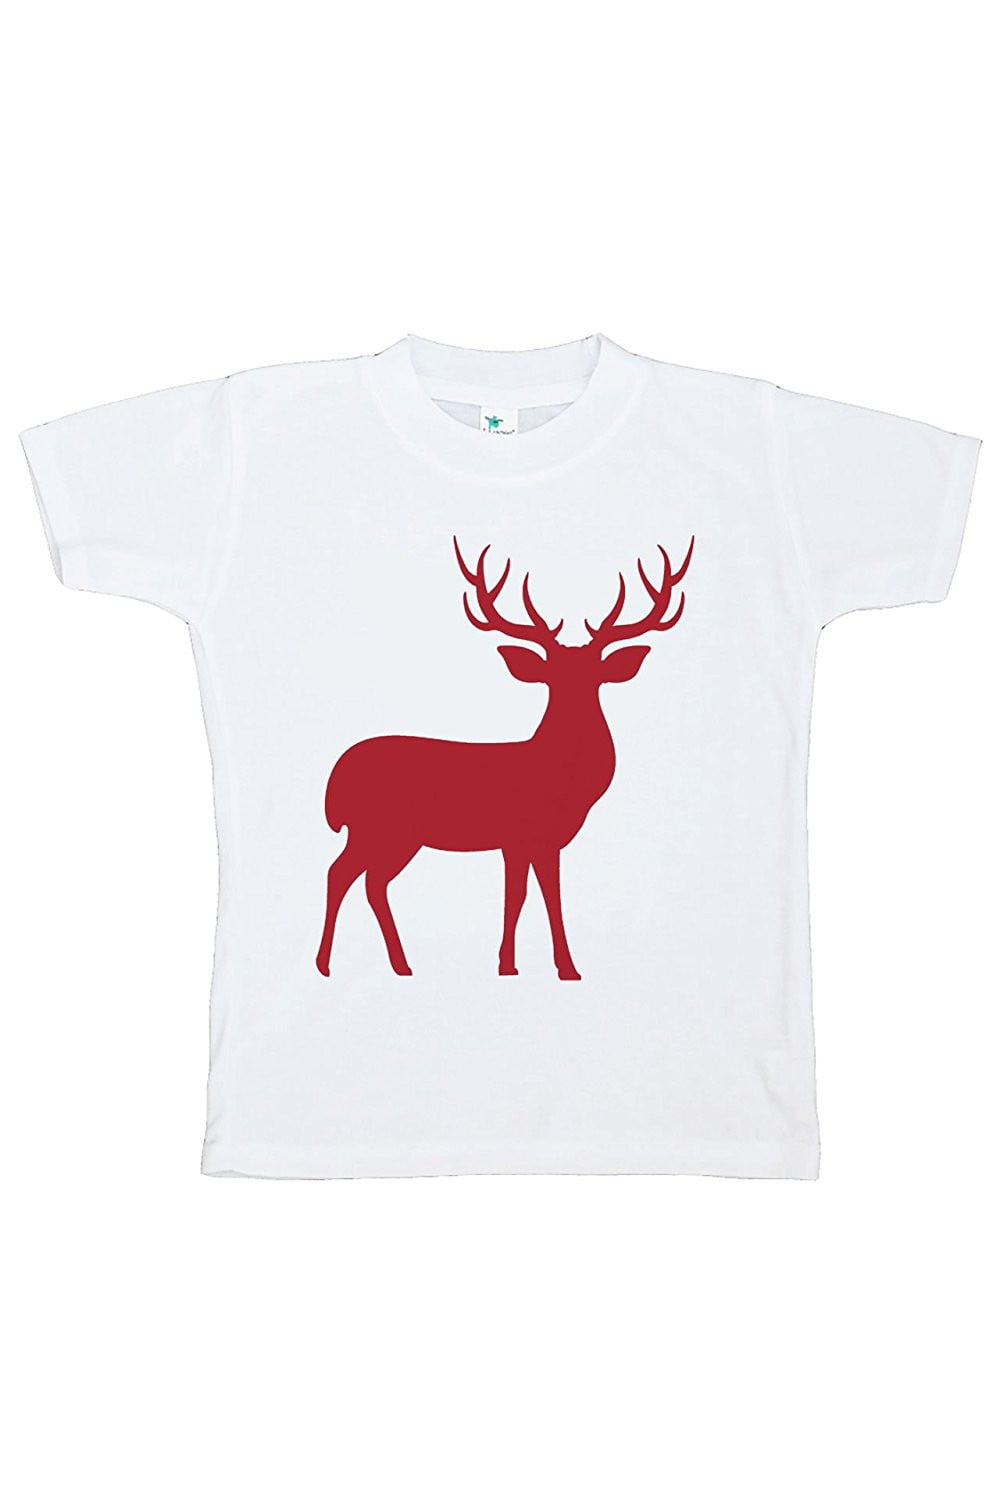 custom t shirts red deer